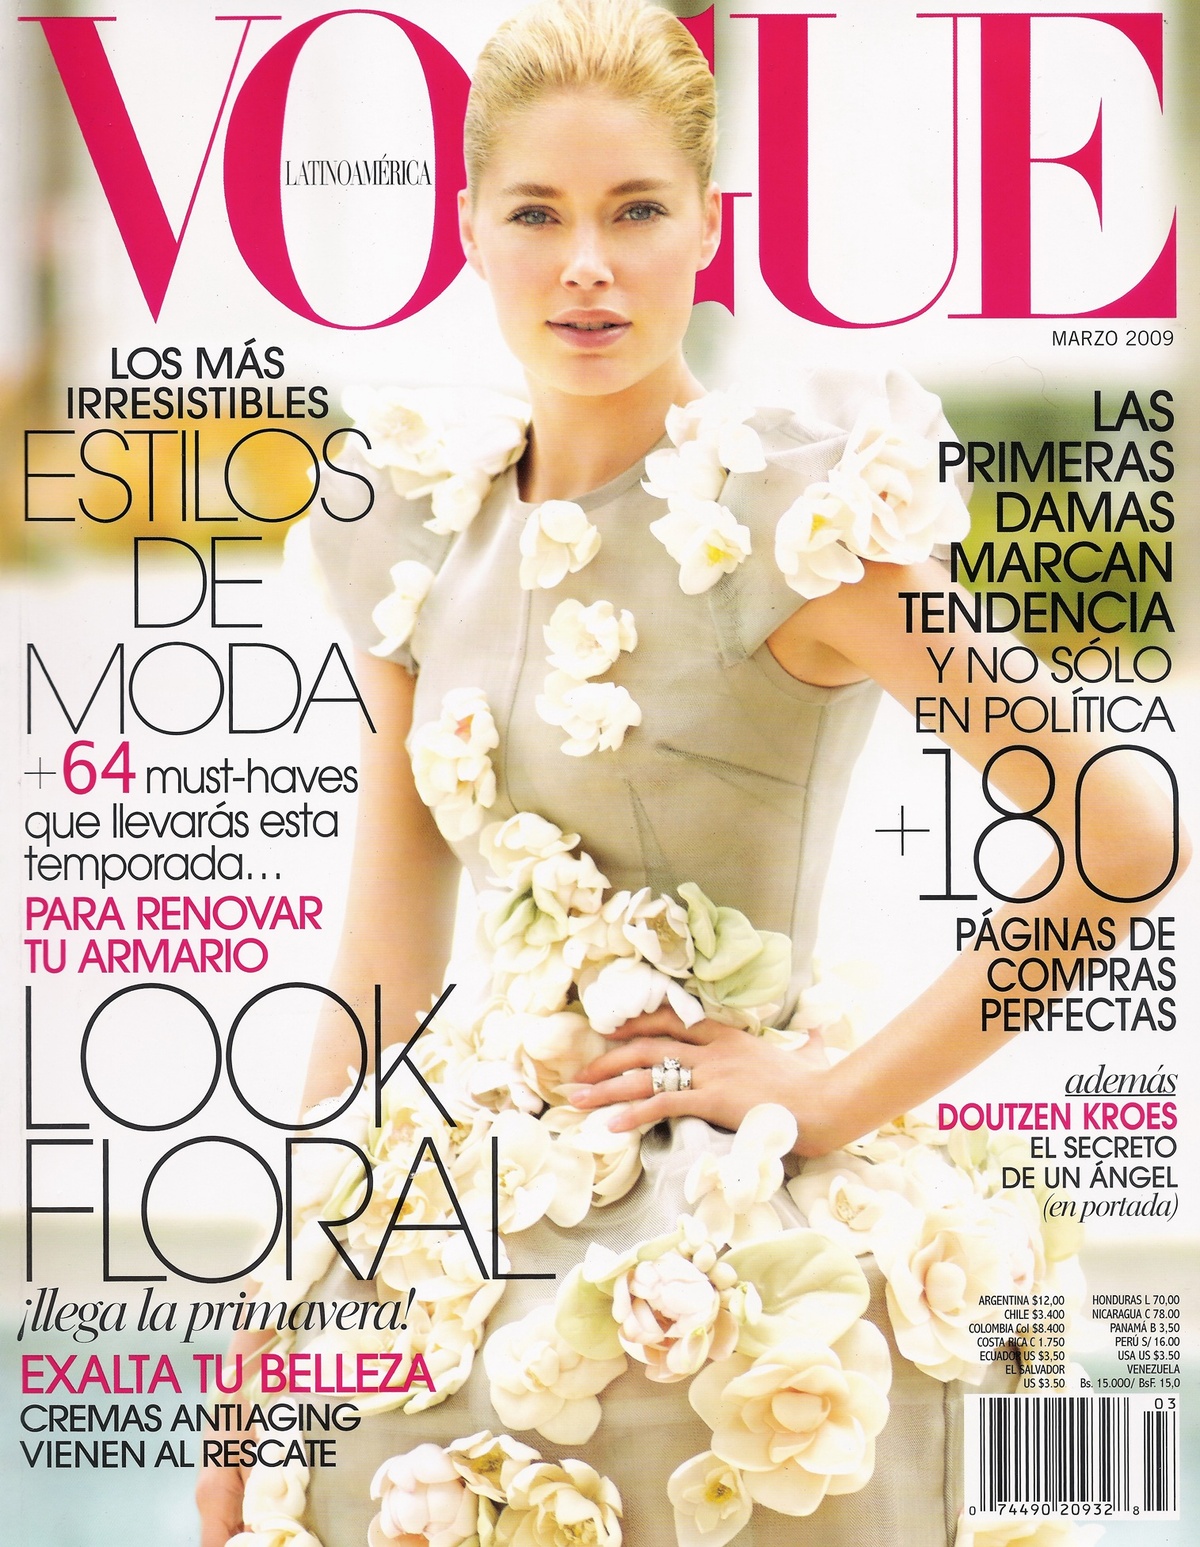 Даутцен Крез в журнале Vogue Latin. Март 2009